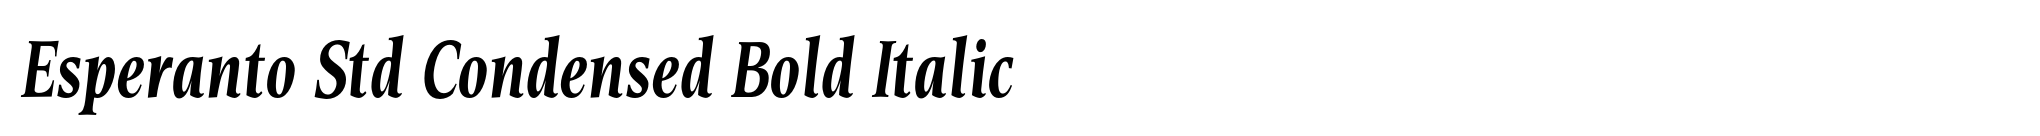 Esperanto Std Condensed Bold Italic image